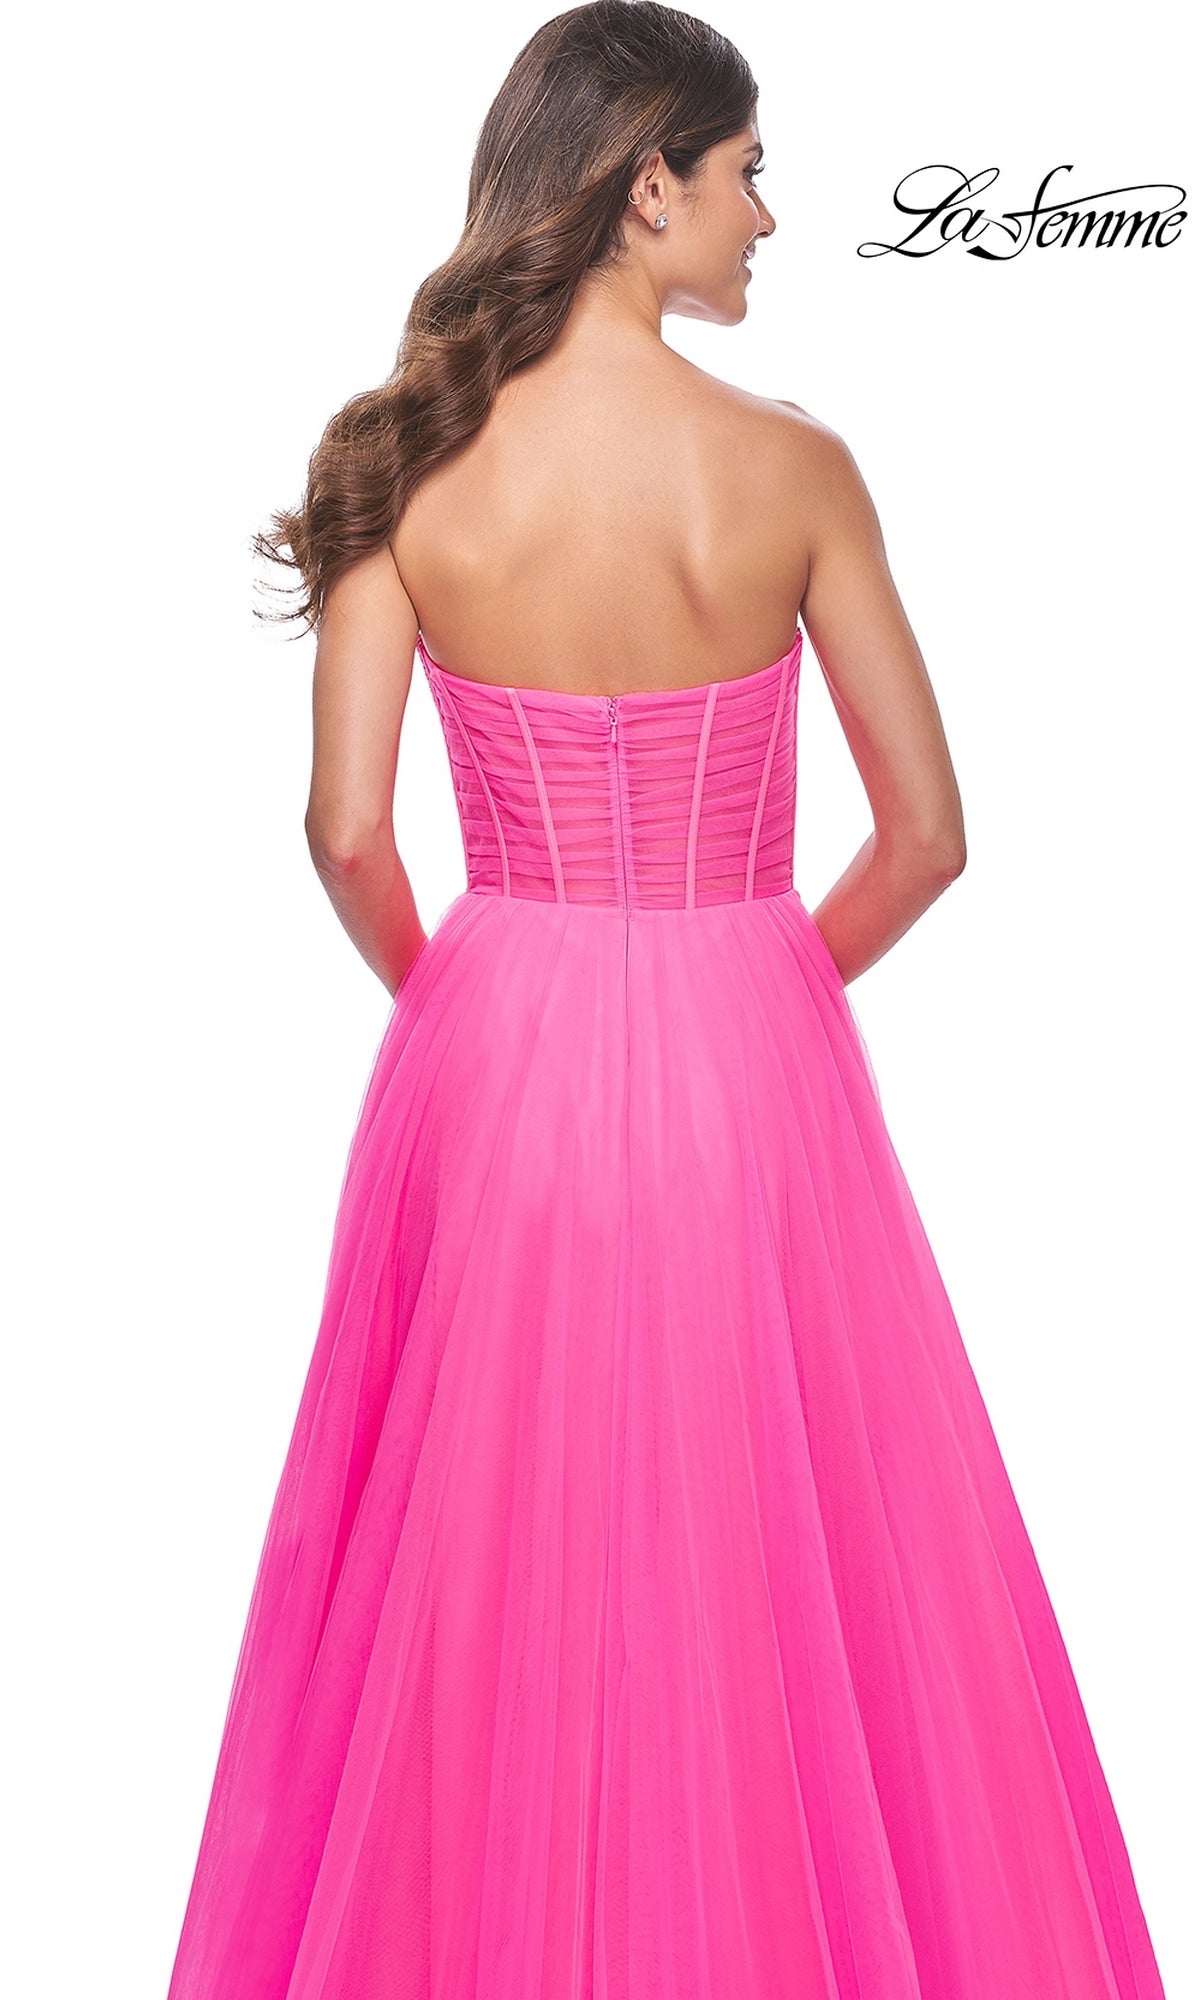  La Femme 32341 Formal Prom Dress